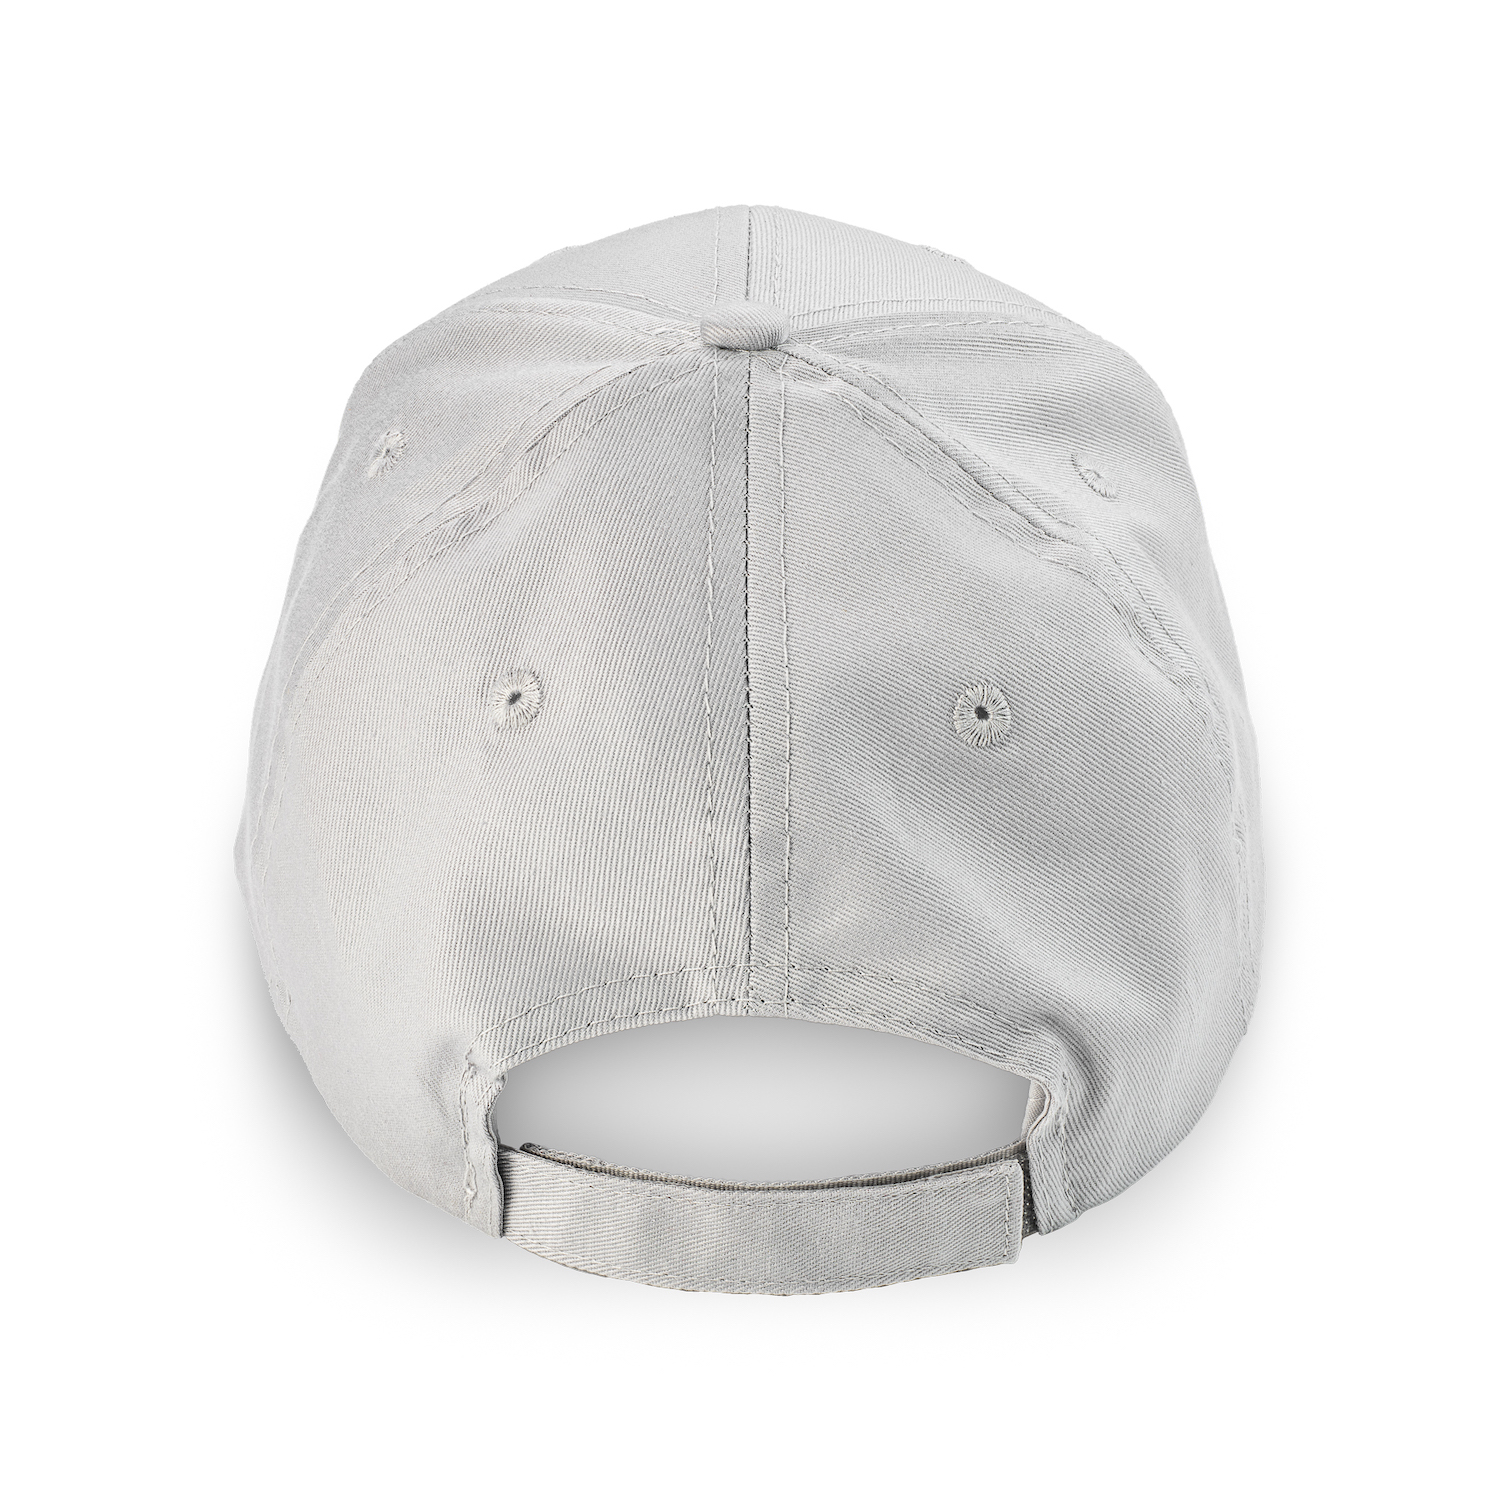 Beau Tyler - DeVito hat silver gray back